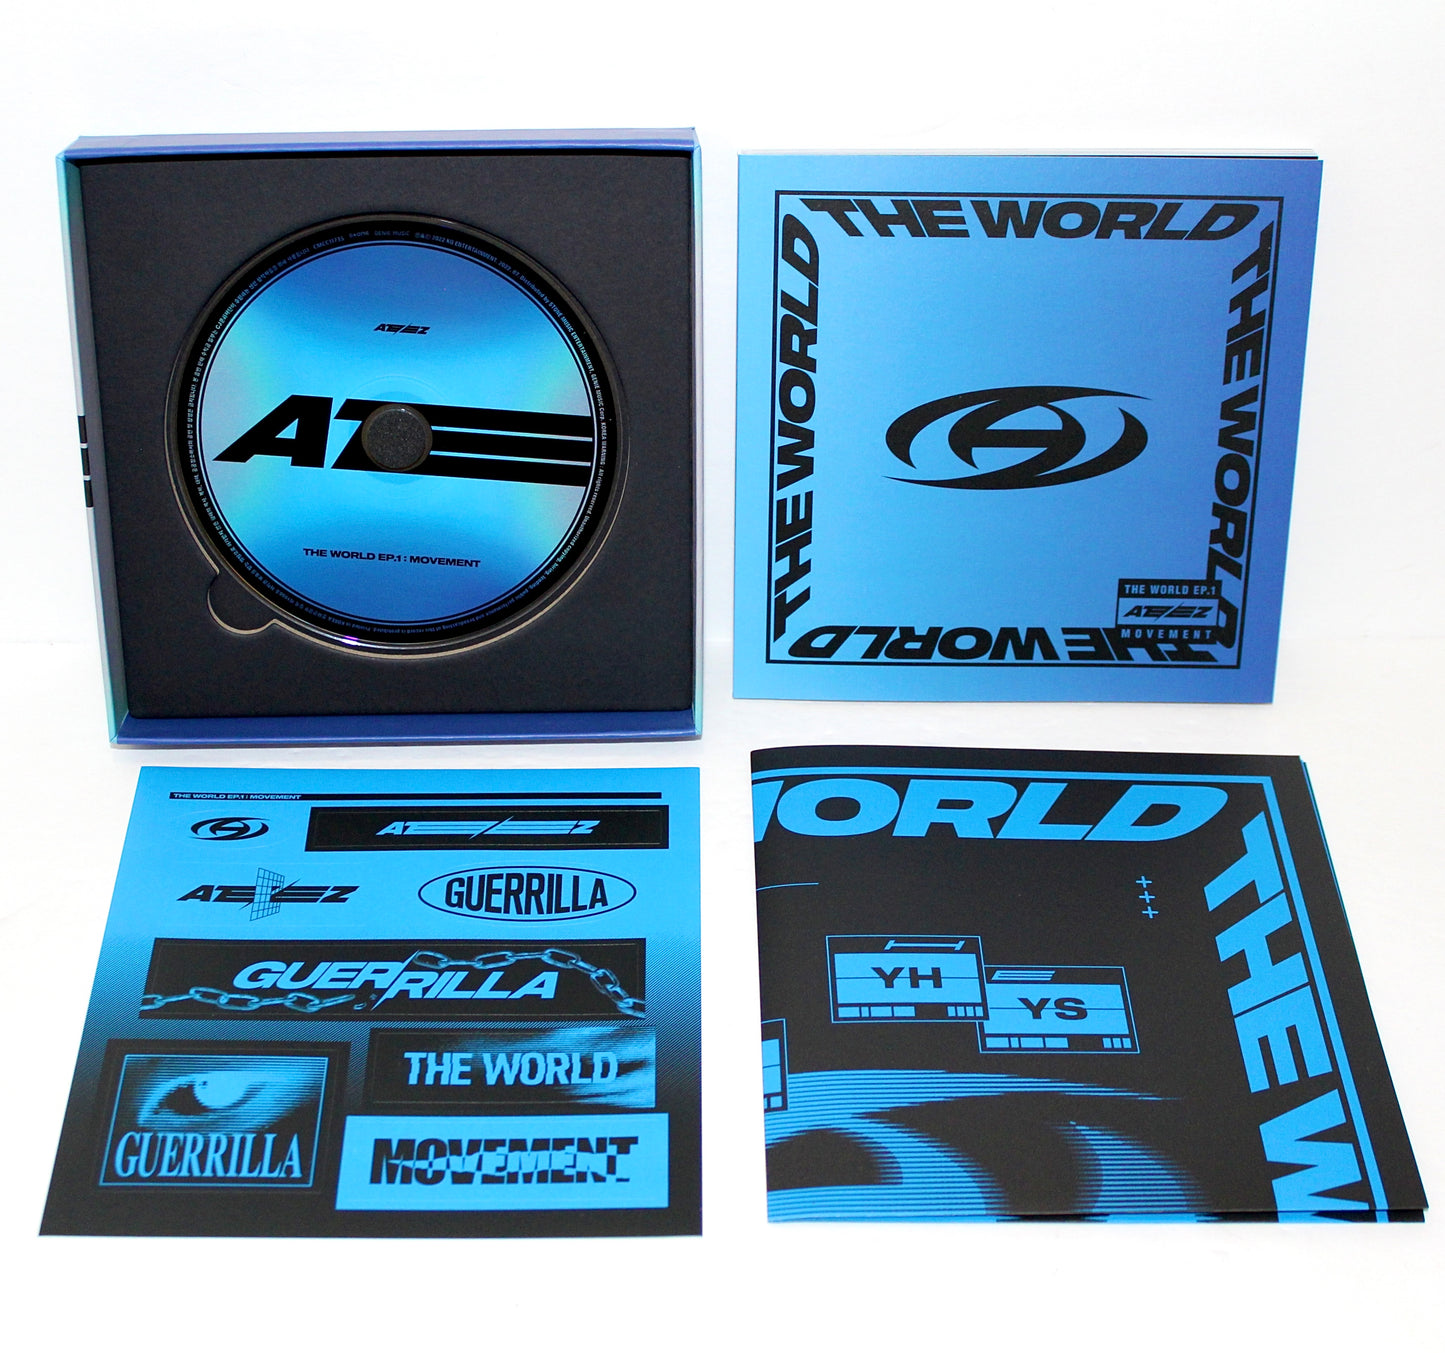 ATEEZ 8th Mini Album - THE WORLD EP.1 : MOVEMENT | A Ver.